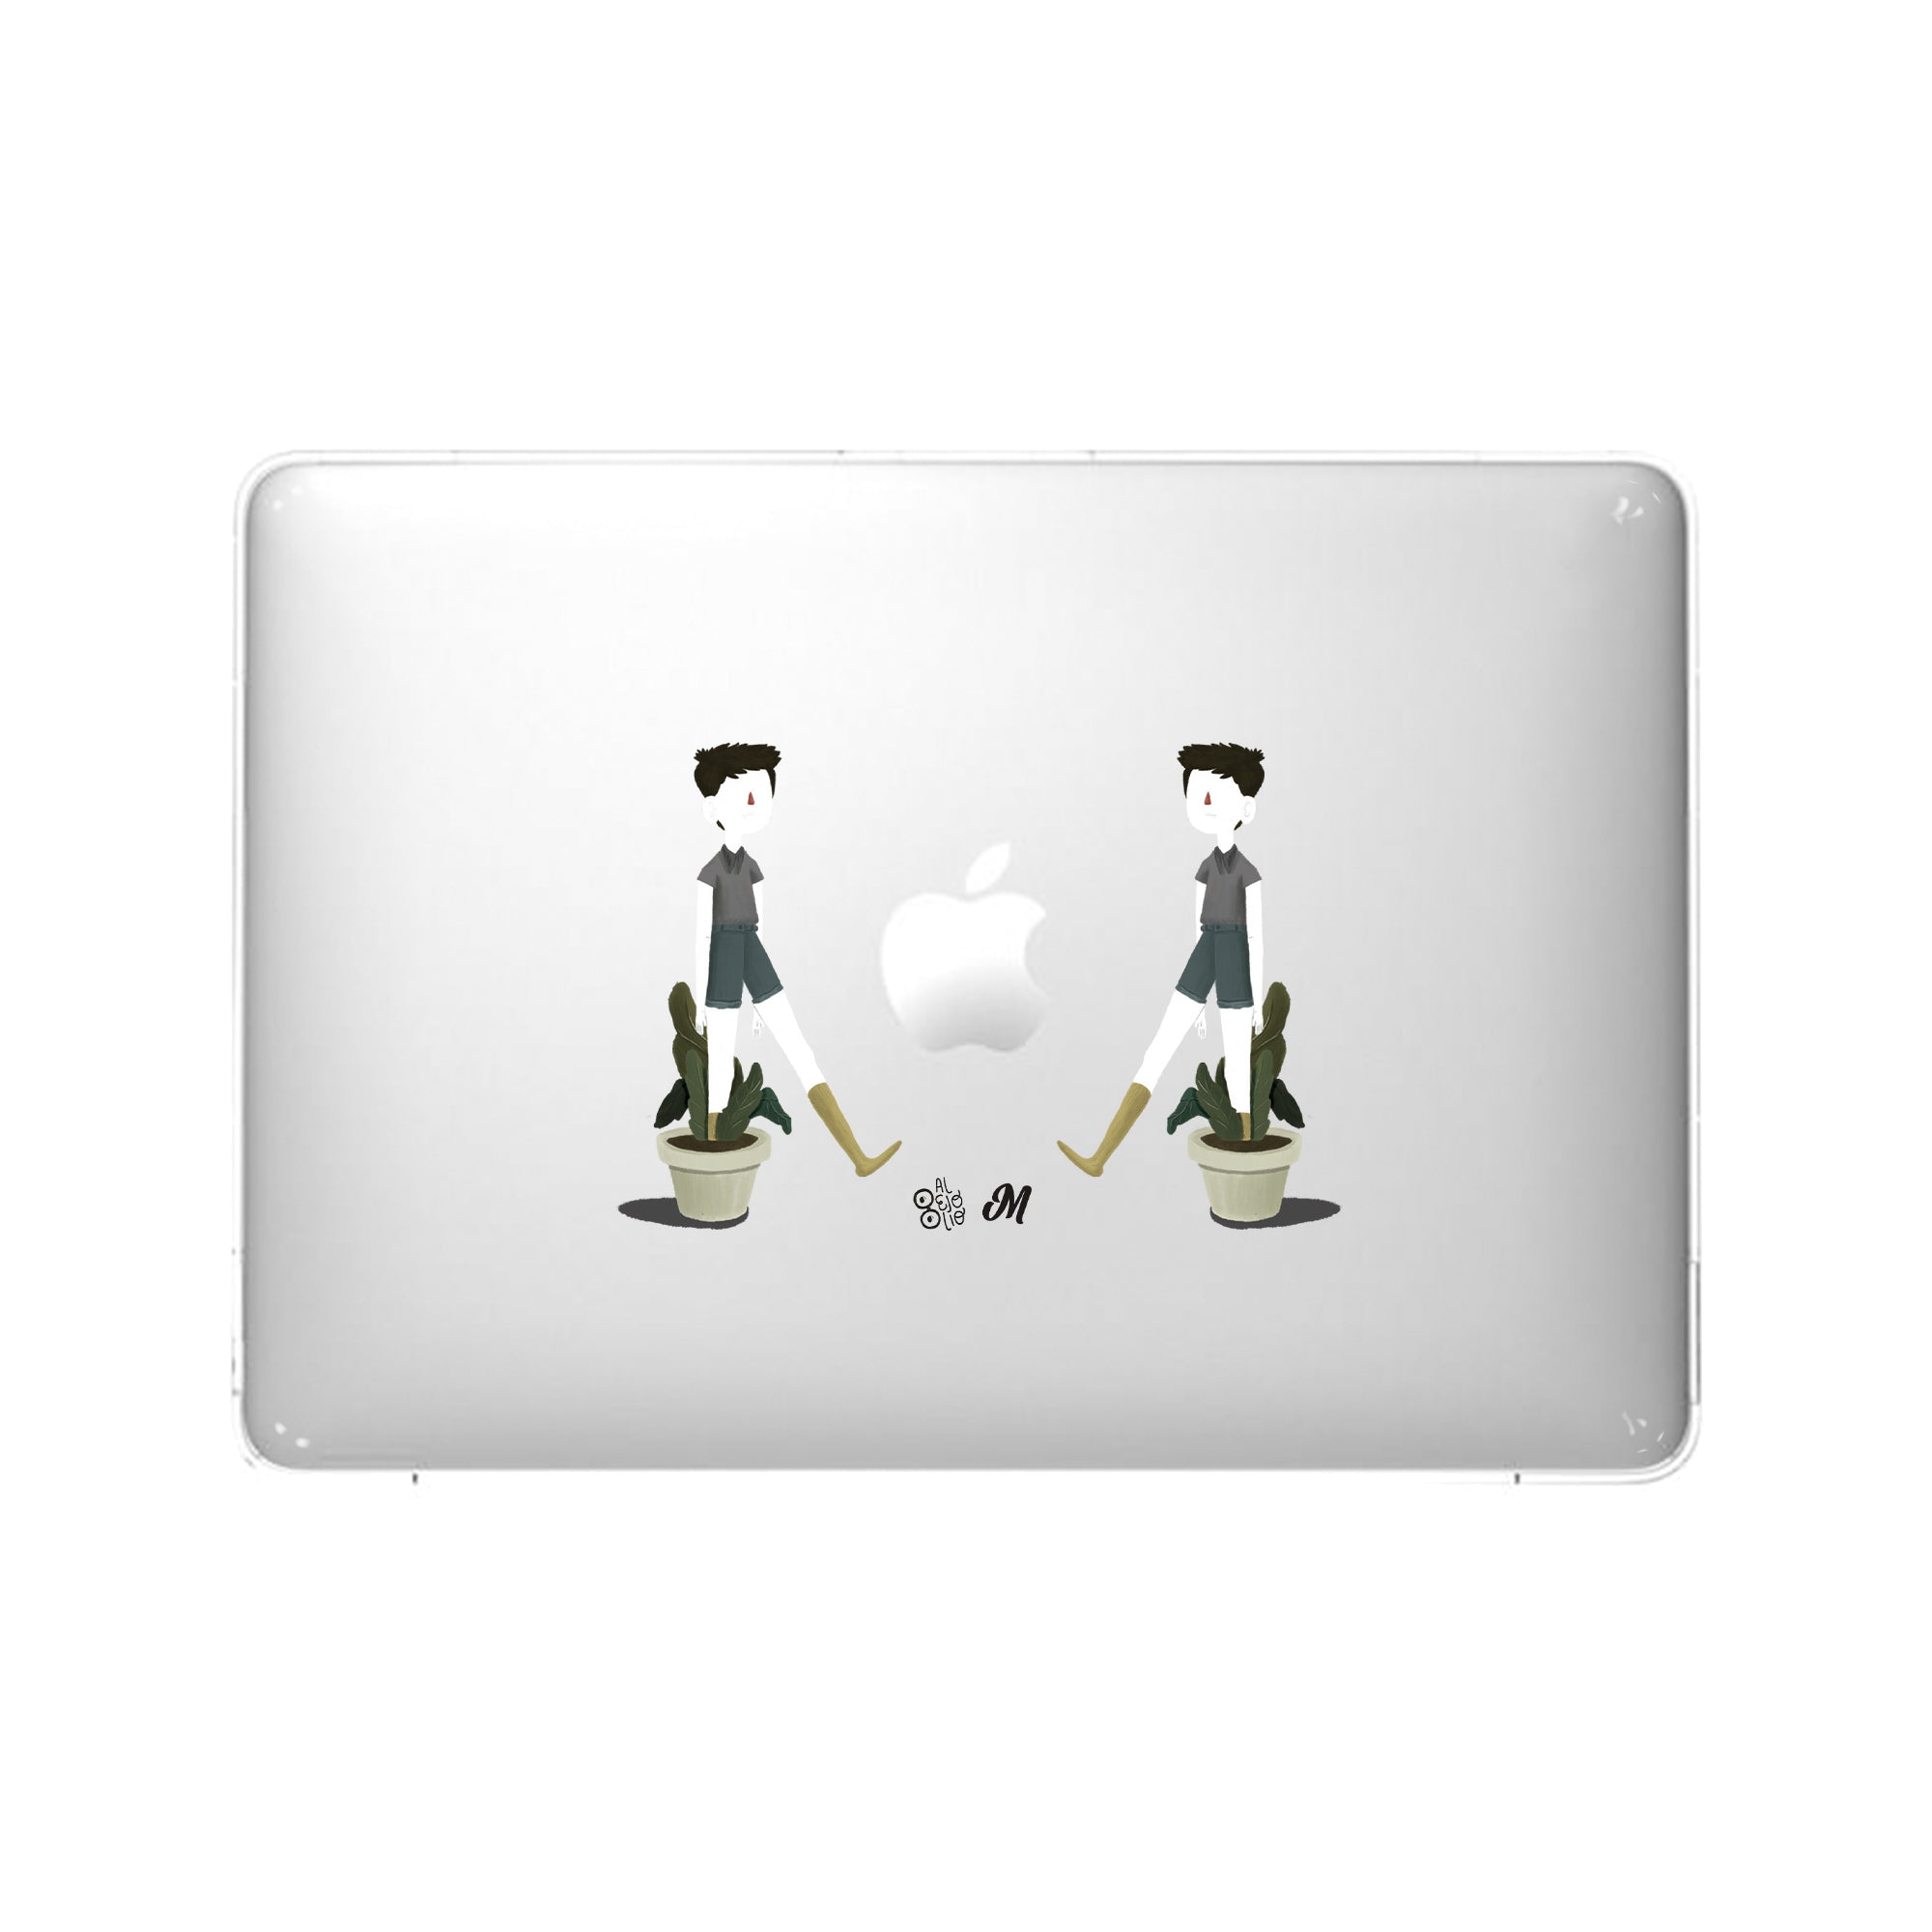 Crece MacBook Case - Mandala Cases